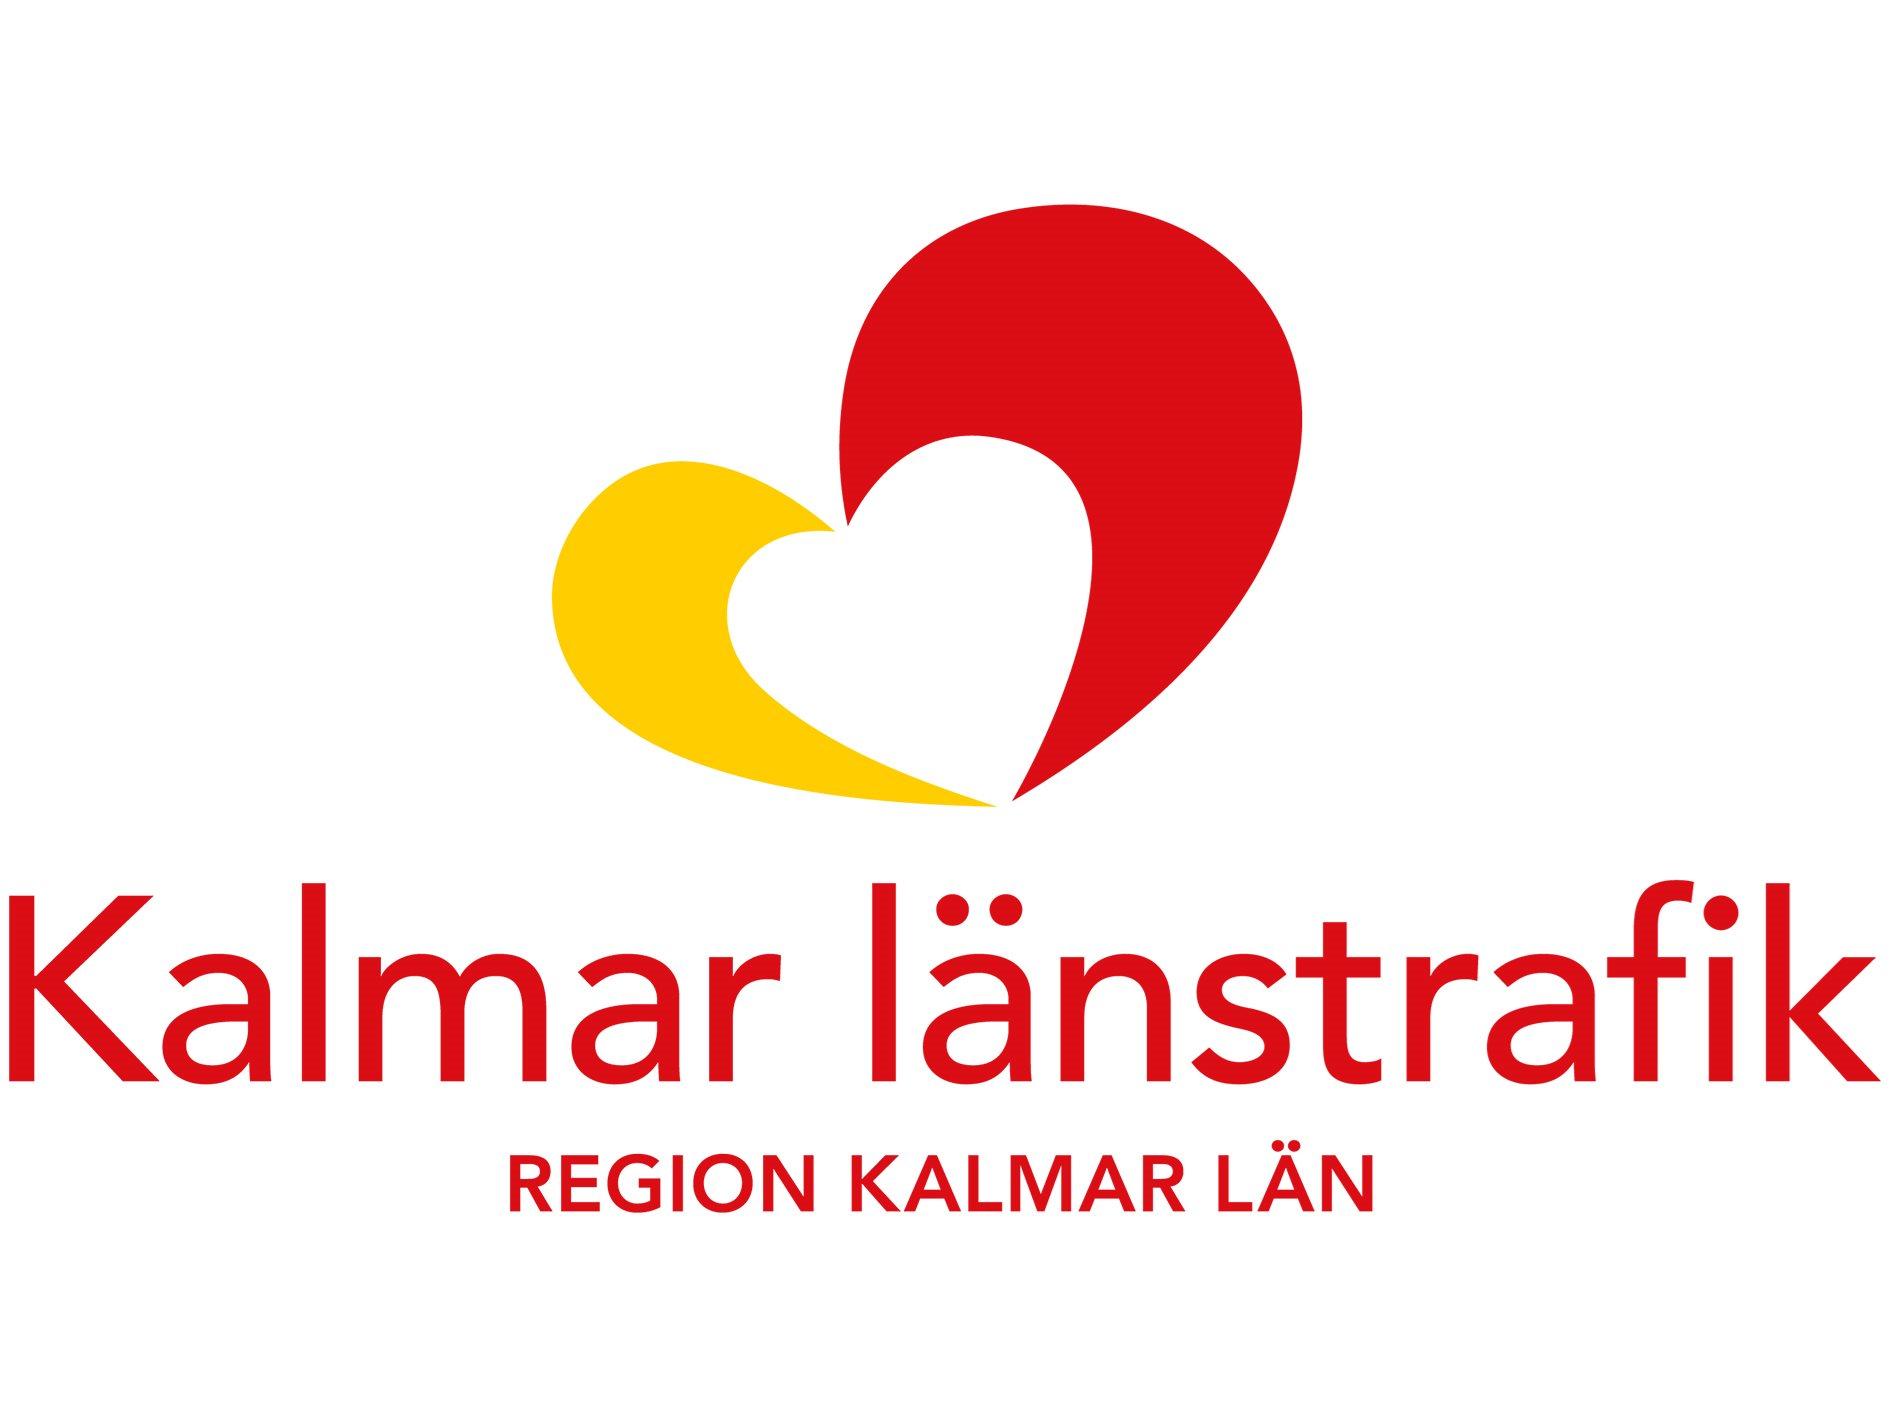 Kalmar länstrafik